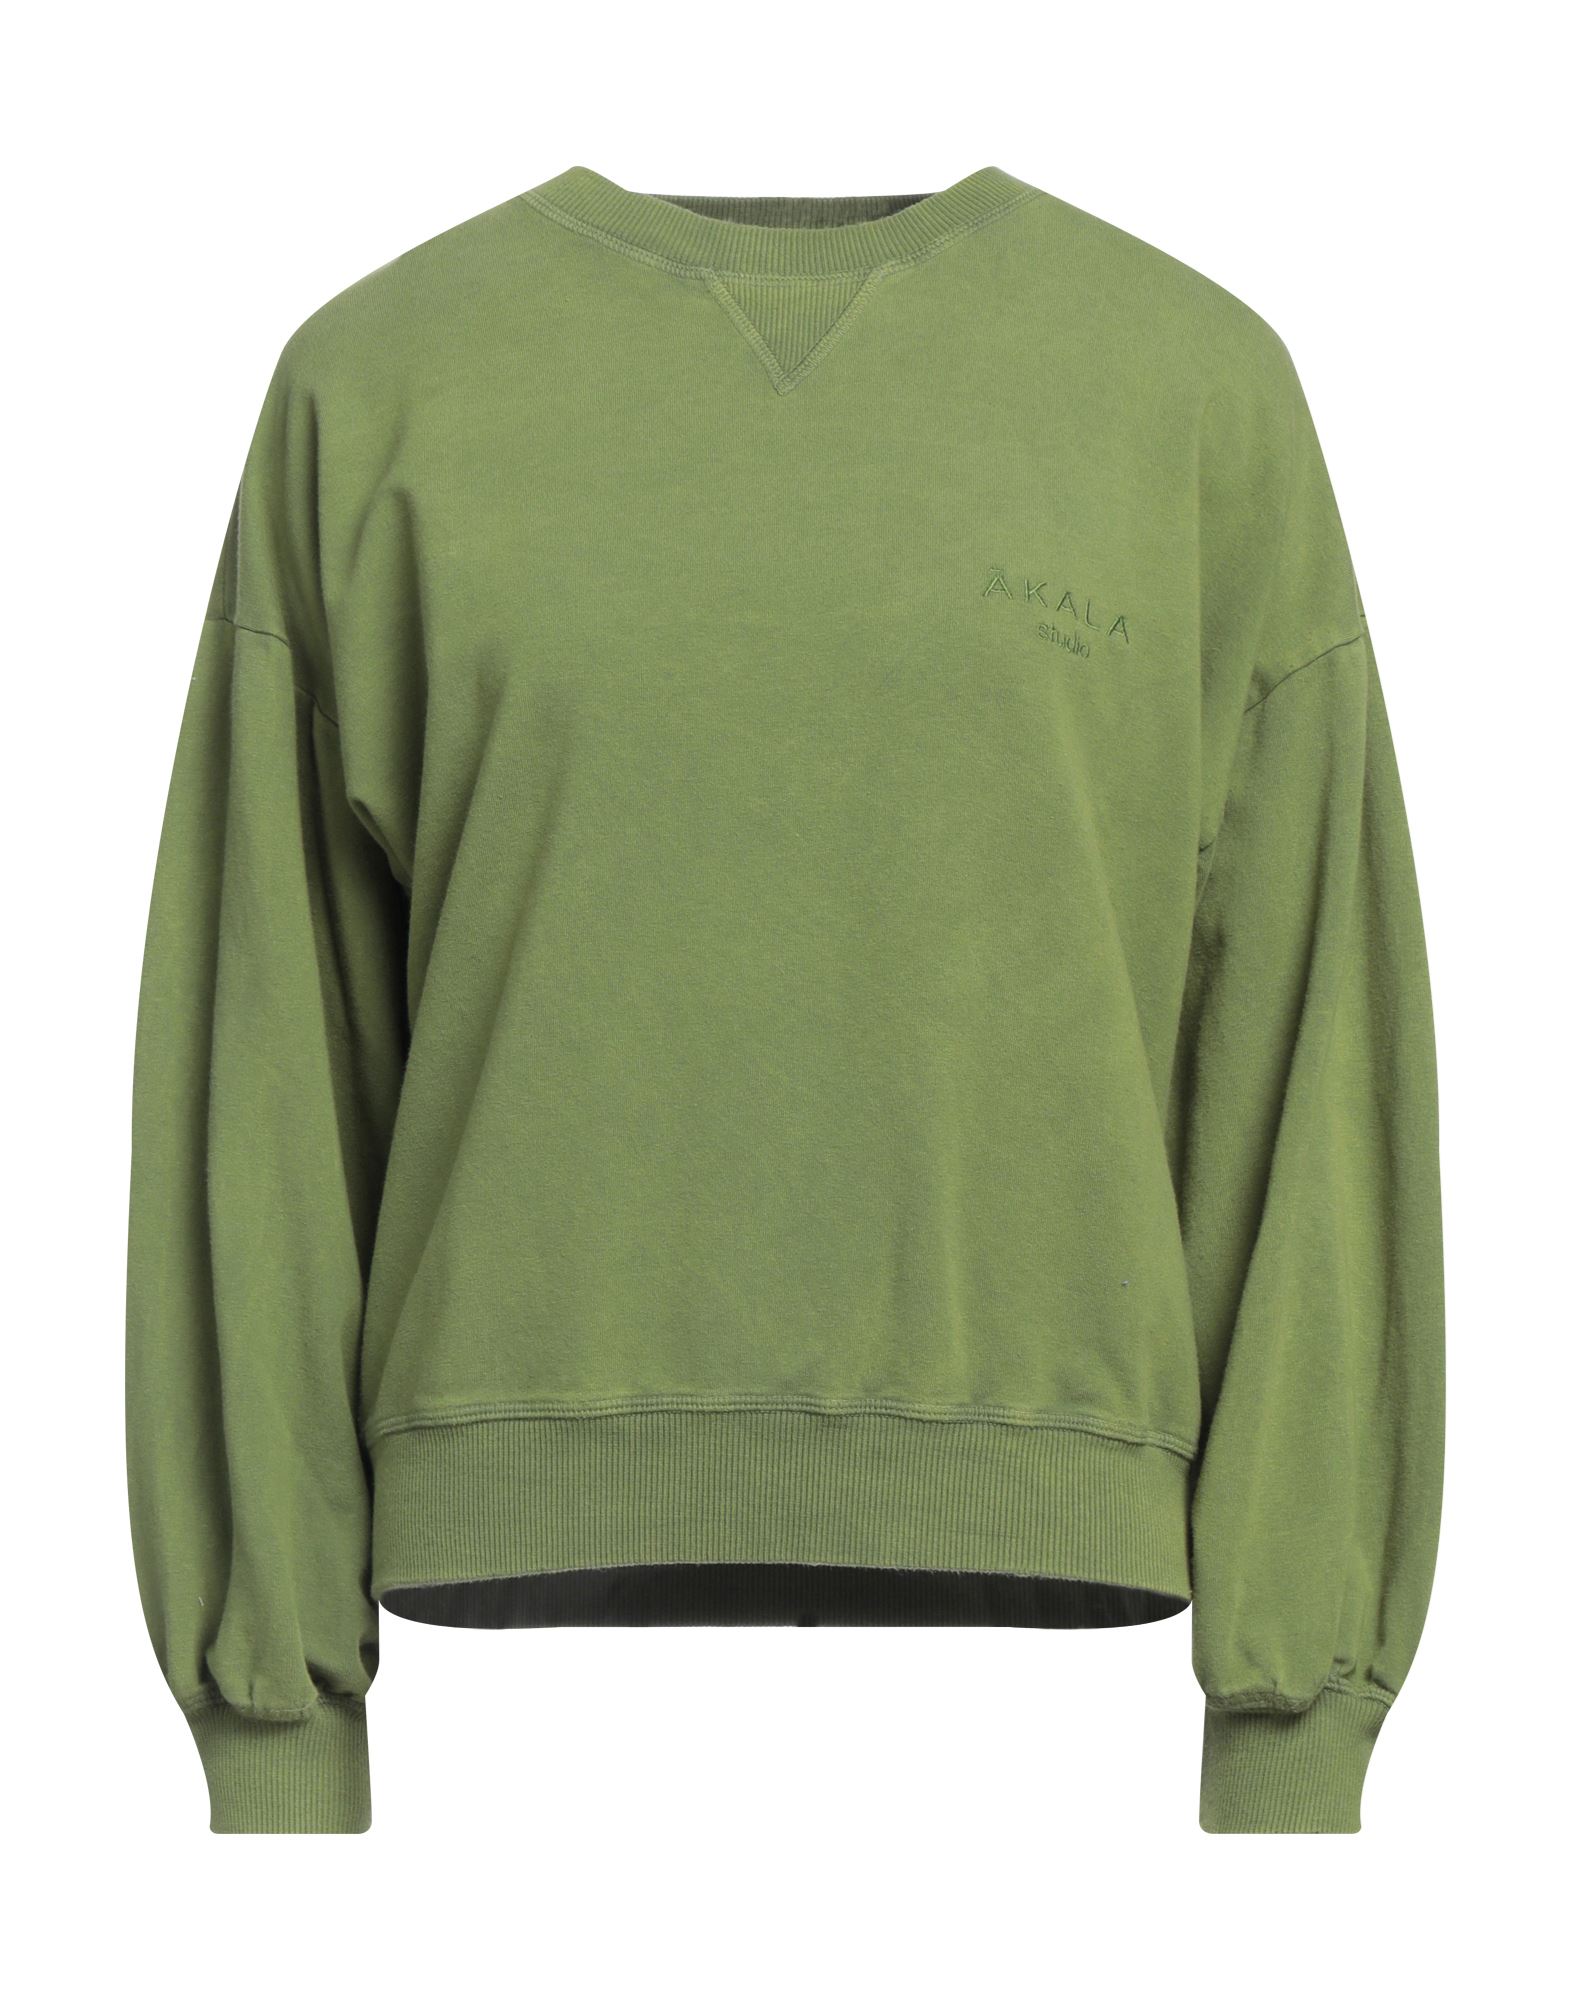 Akala Studio Sweatshirts In Green